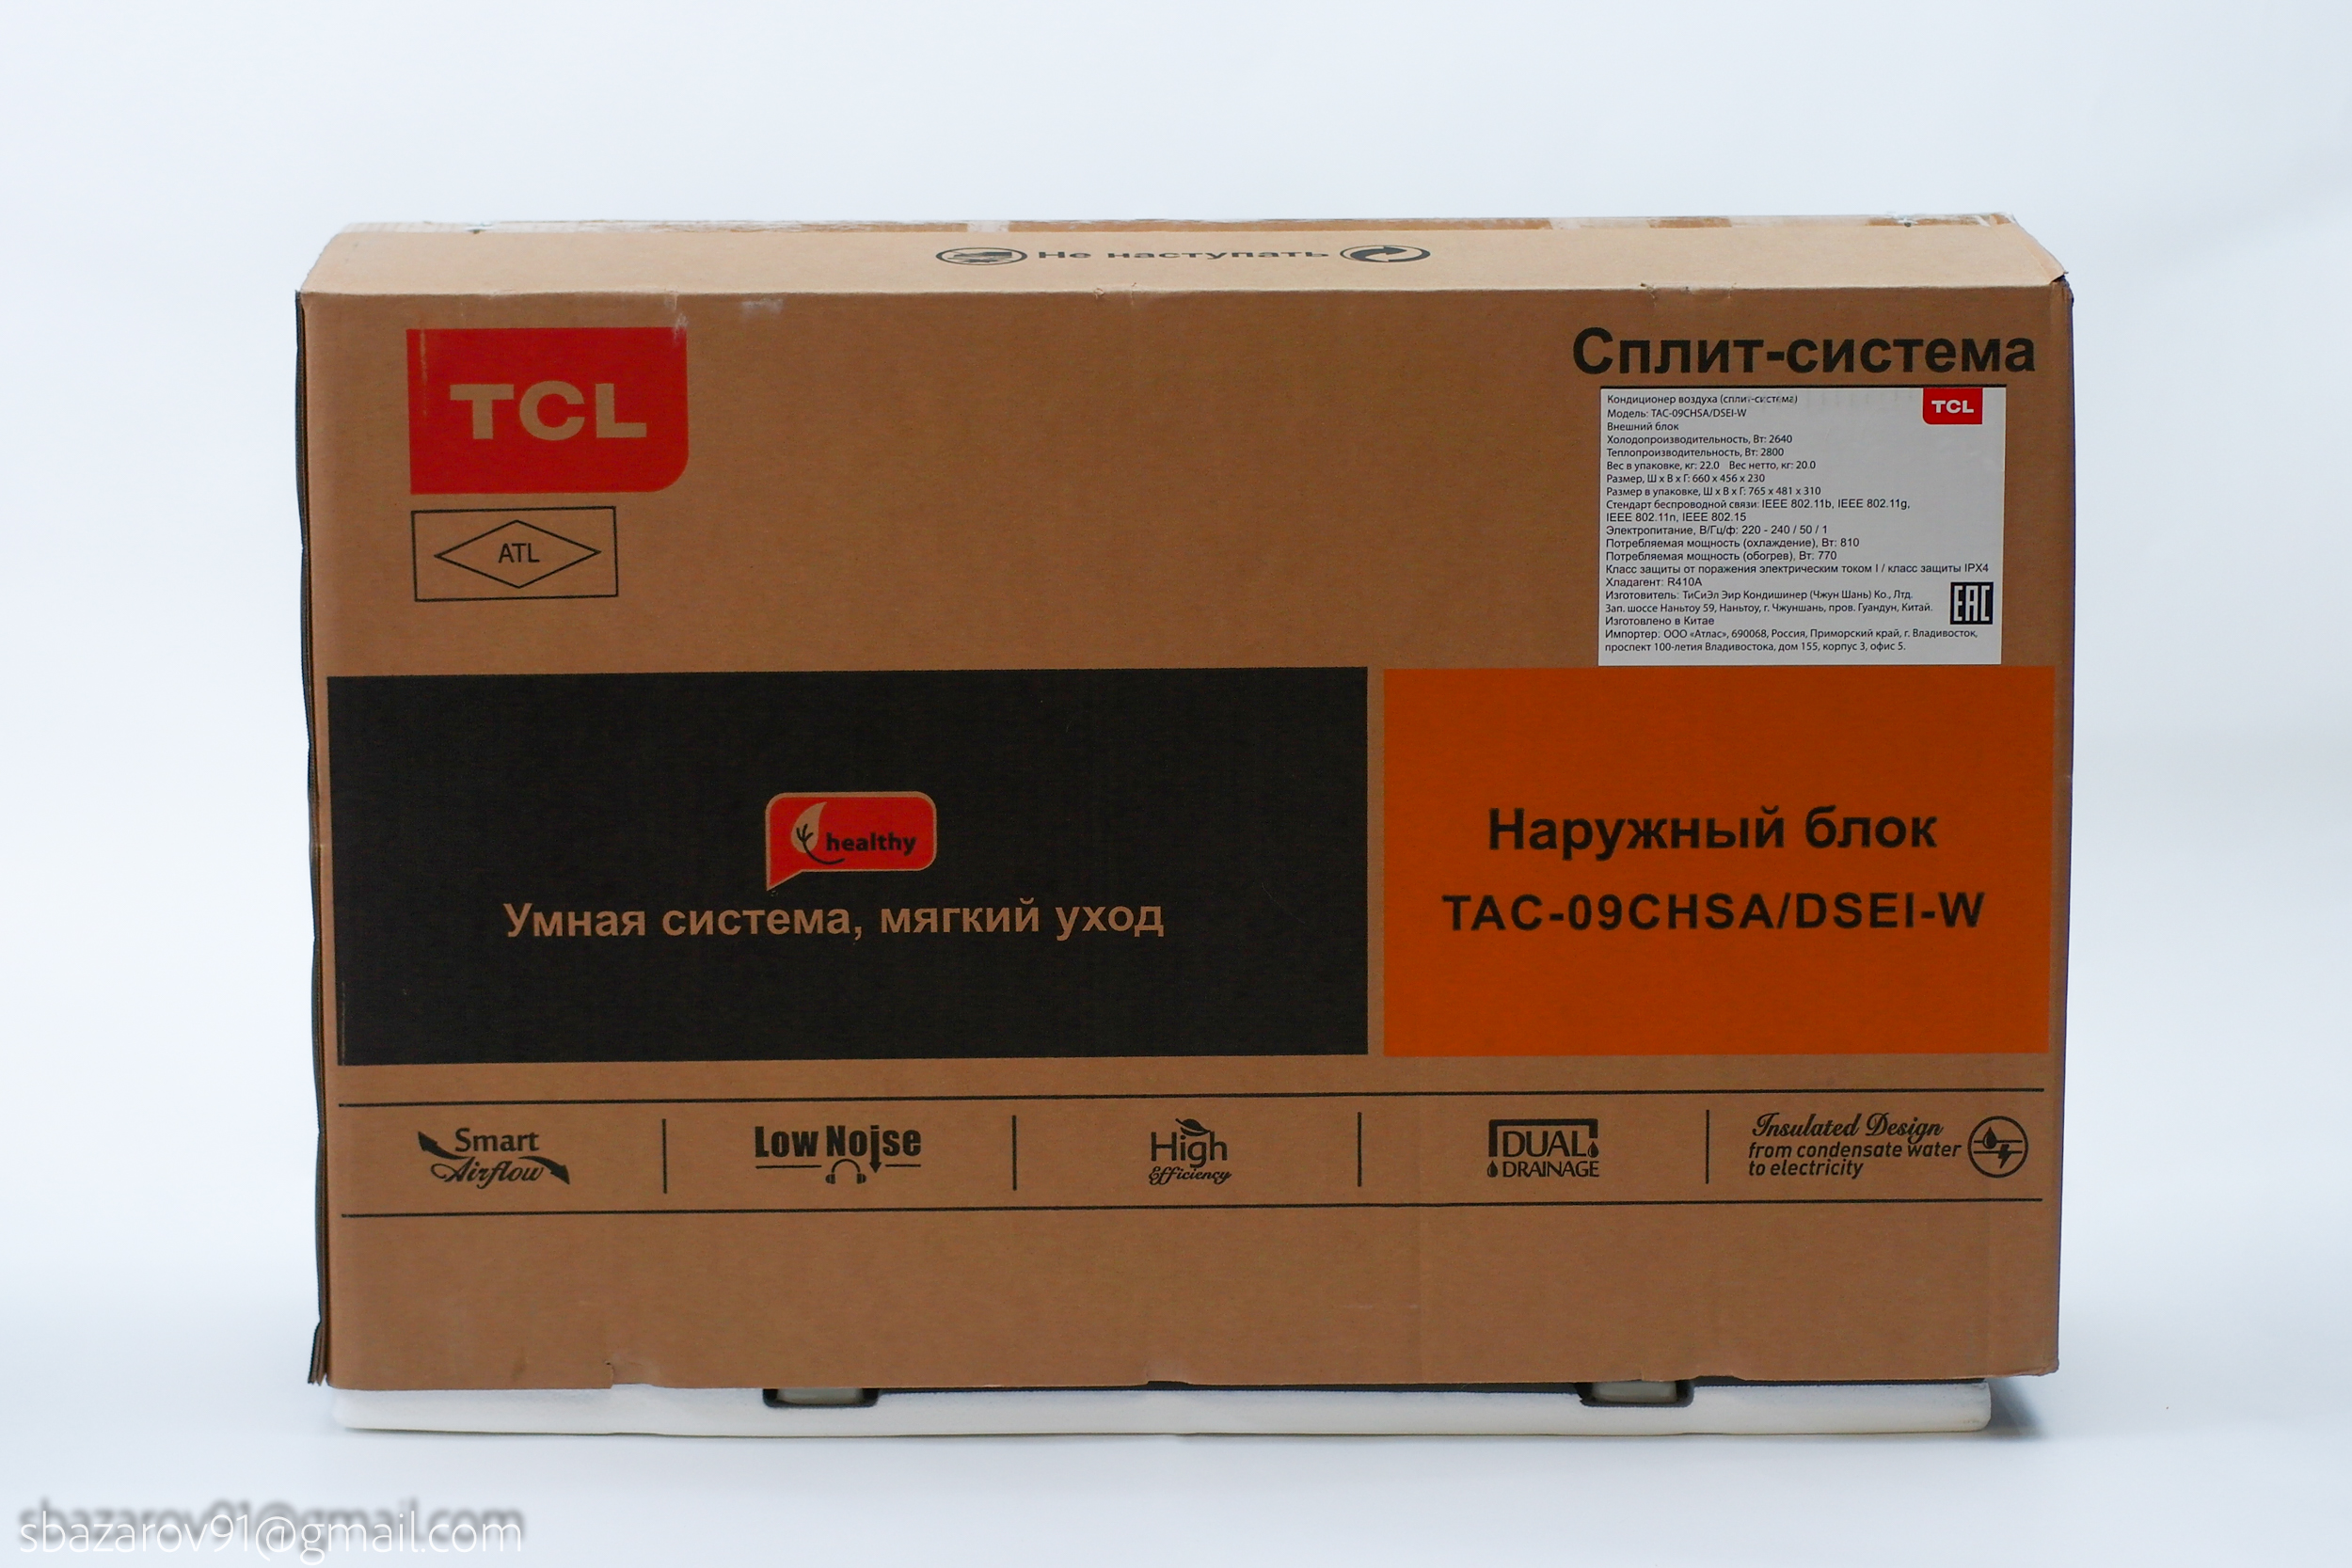 Tcl tac 09chsa dsei w. Сплит-система TCL tac-09chsa/DSEI-W. TCL tac-12chsa/DSEI-W. TCL logo PNG.